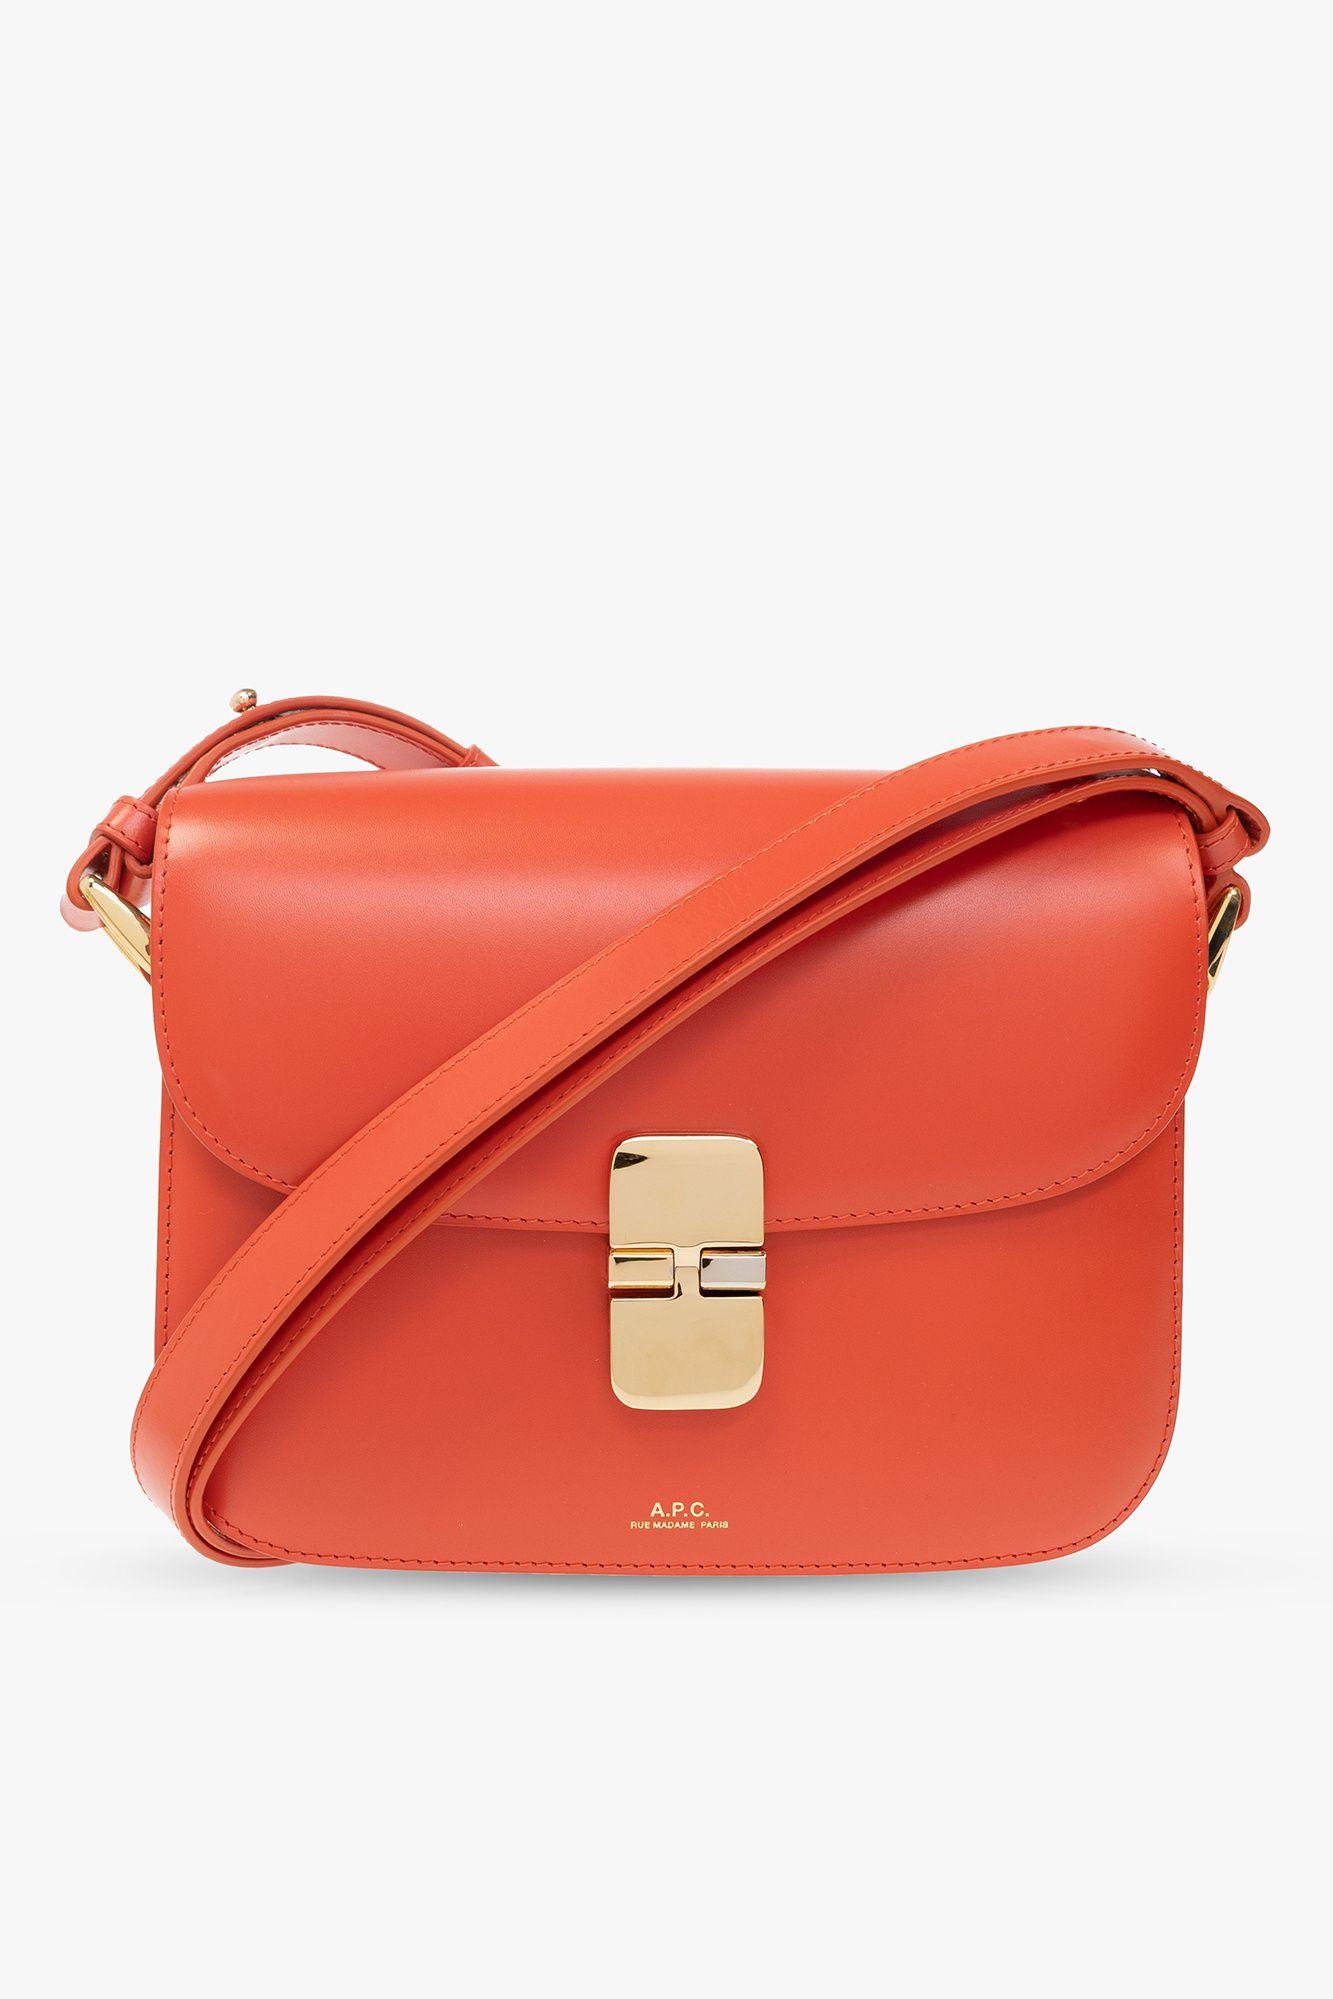 A.P.C Grace Leather Shoulder Bag - Red